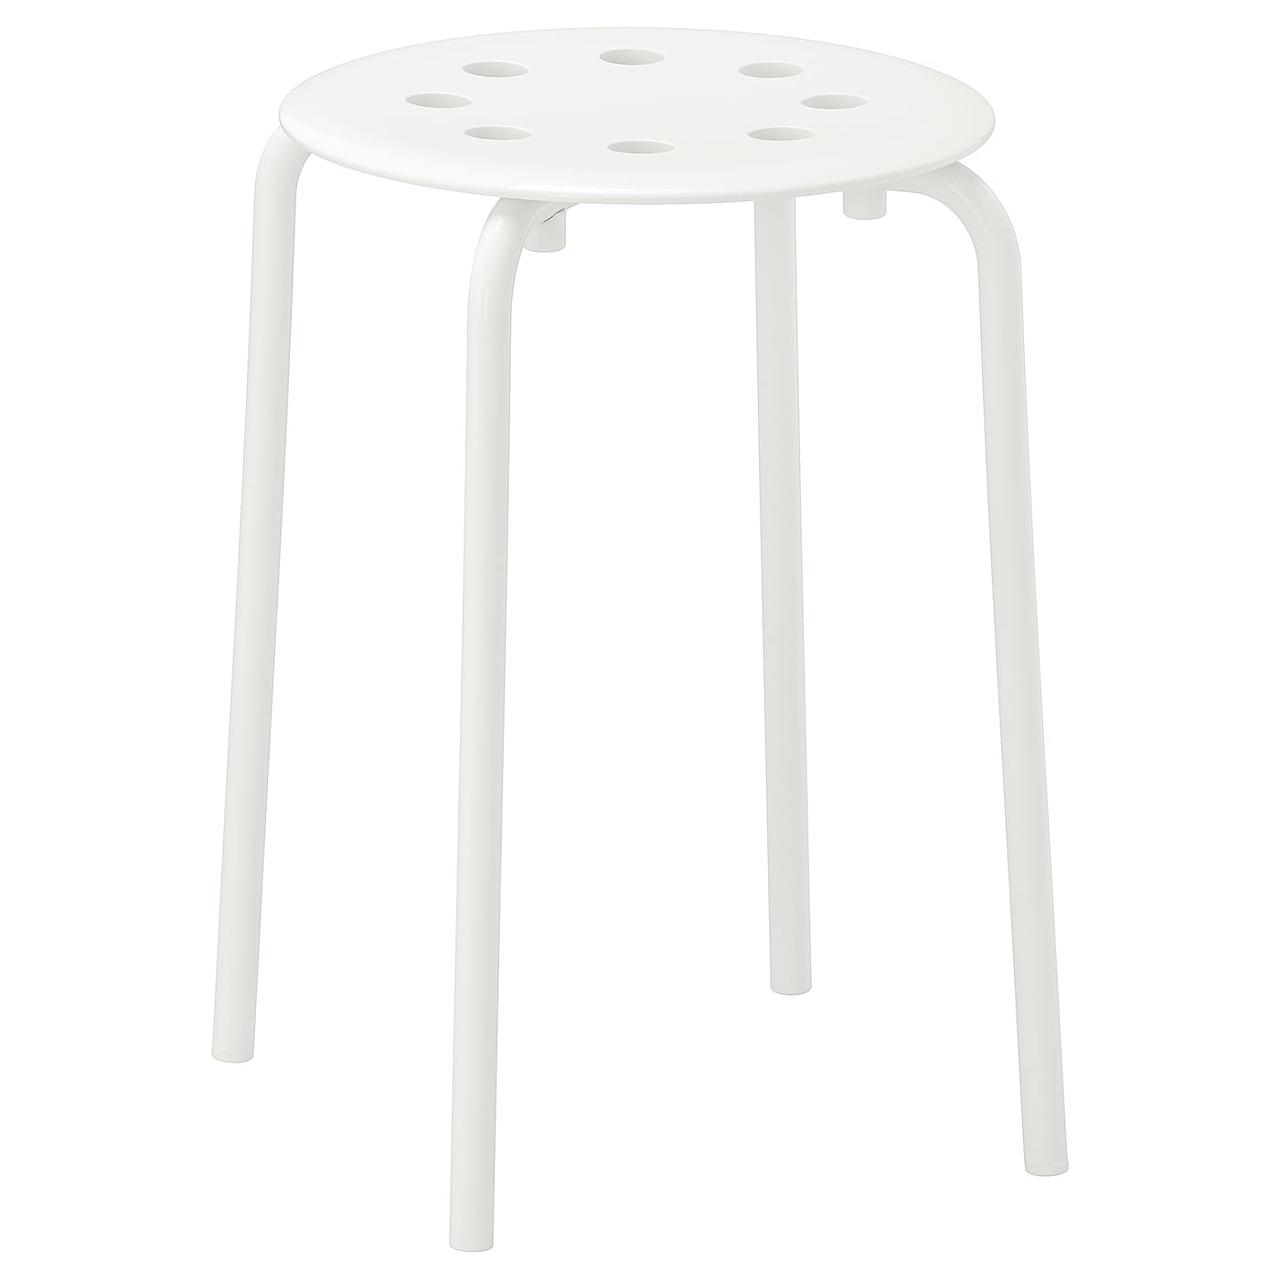 IKEA/ МАРИУС Табурет, белый45 см